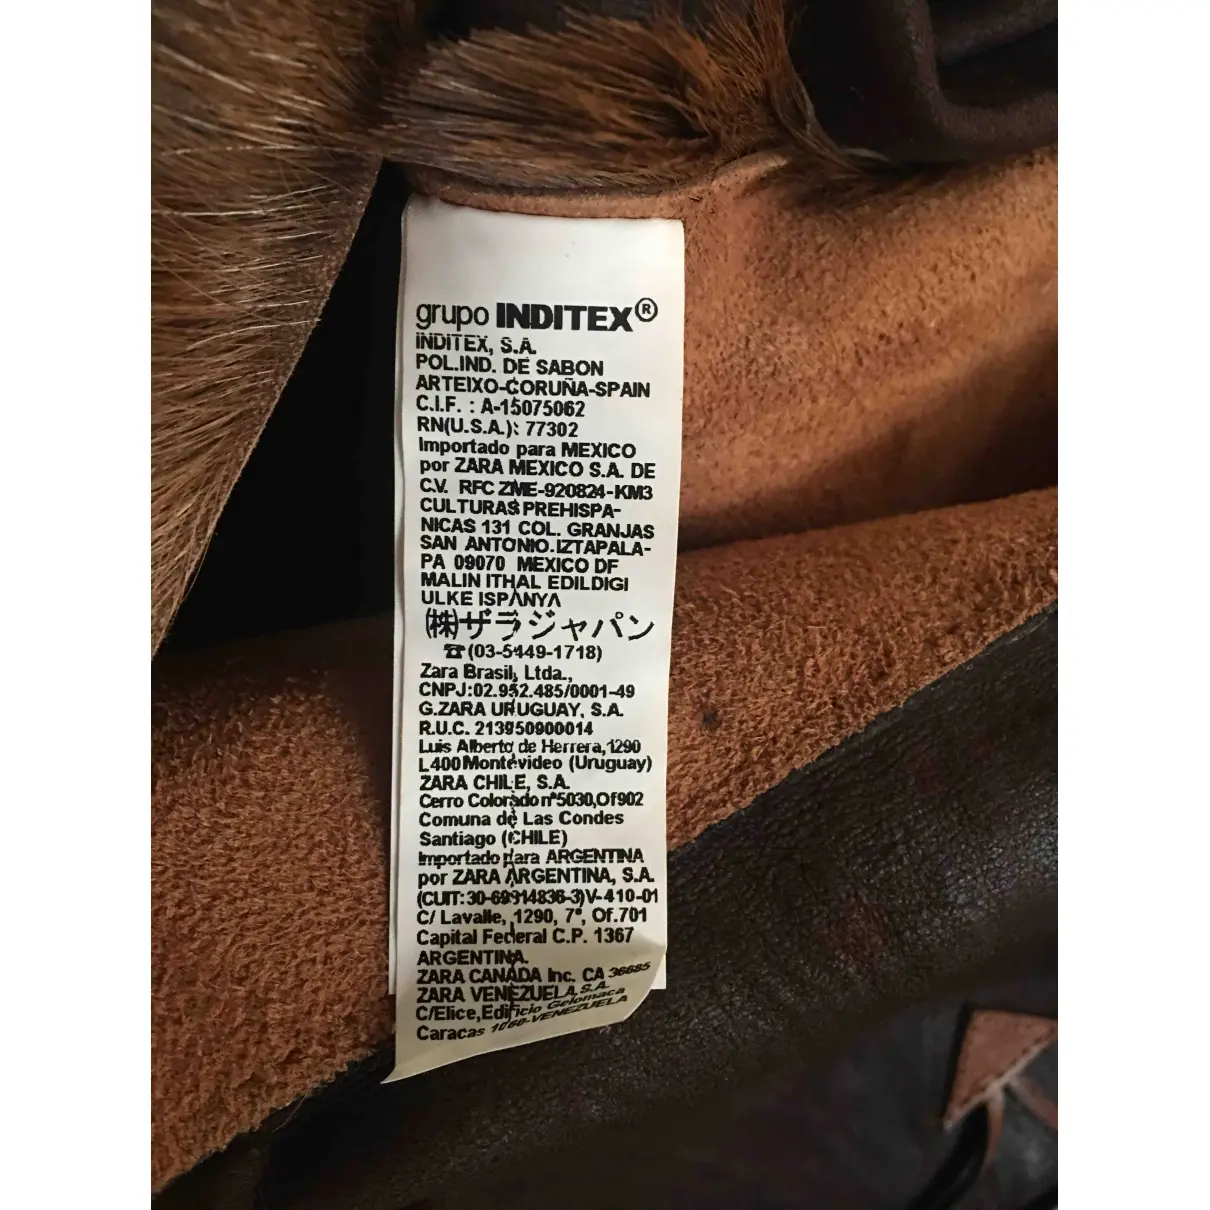 Buy Zara Leather crossbody bag online